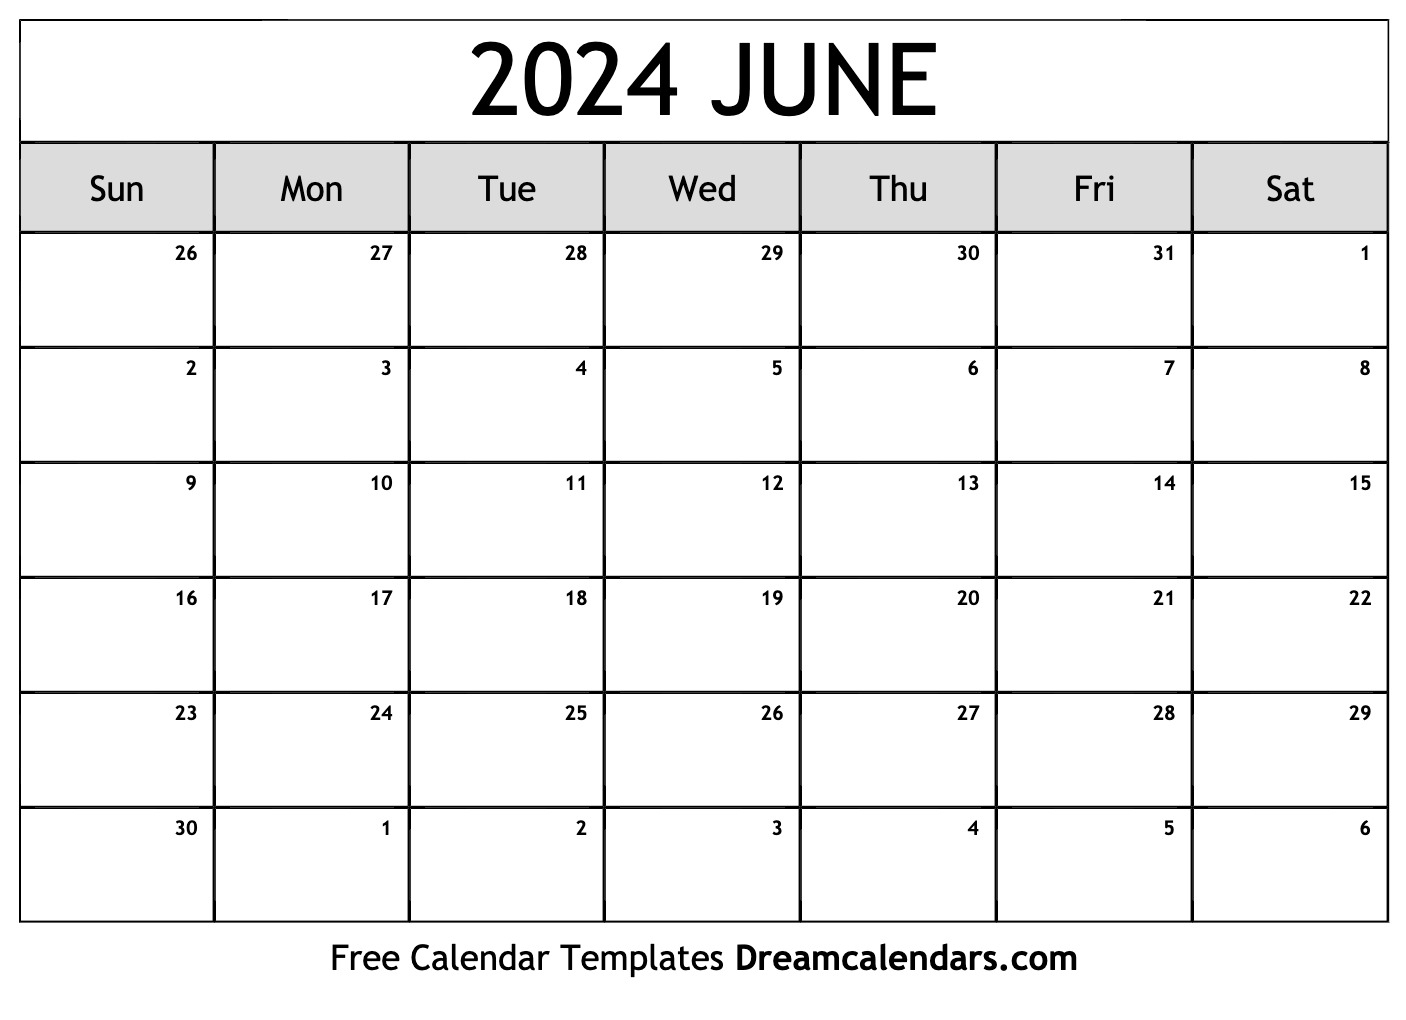 June 2024 Calendar | Free Blank Printable With Holidays for June 2024 Editable And Printable Calendar